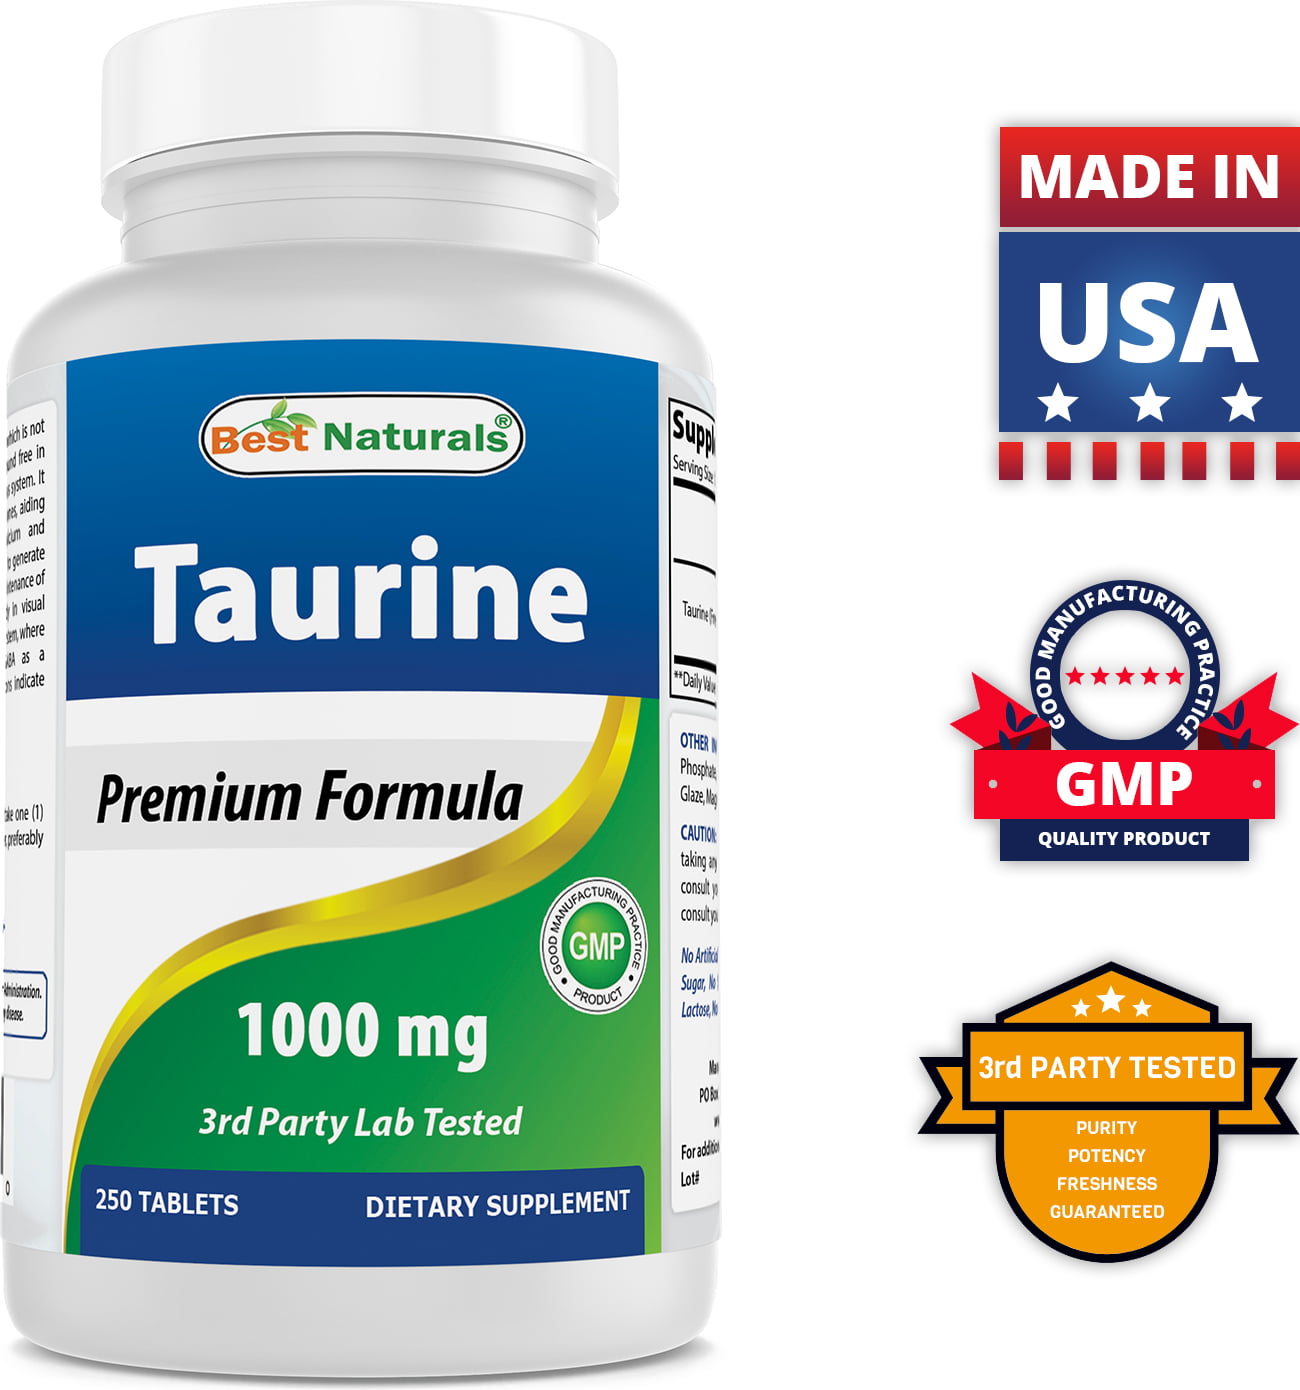 Best Naturals Taurine 1000 mg 250 Tablets | Supports Eye Health, Cellular Activity & Cardiovascular Health - Walmart.com